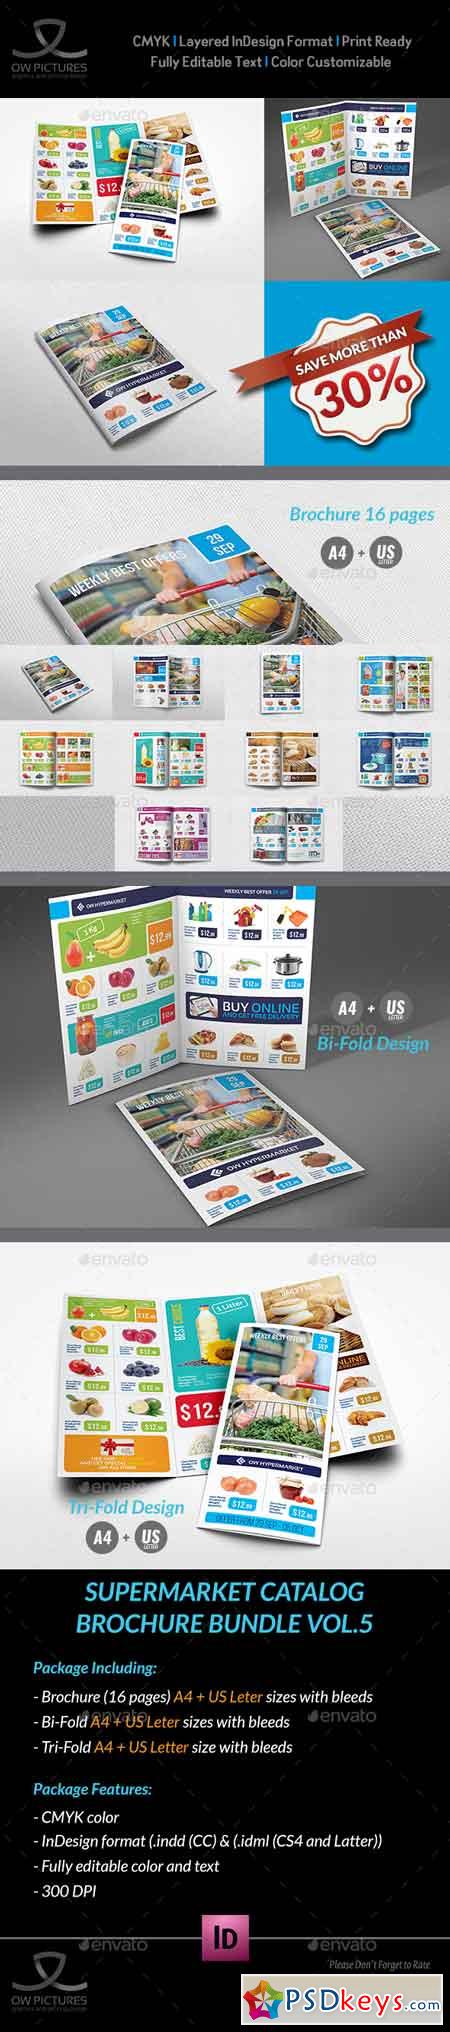 Supermarket Catalog Brochure Bundle Template Vol 5 22863367